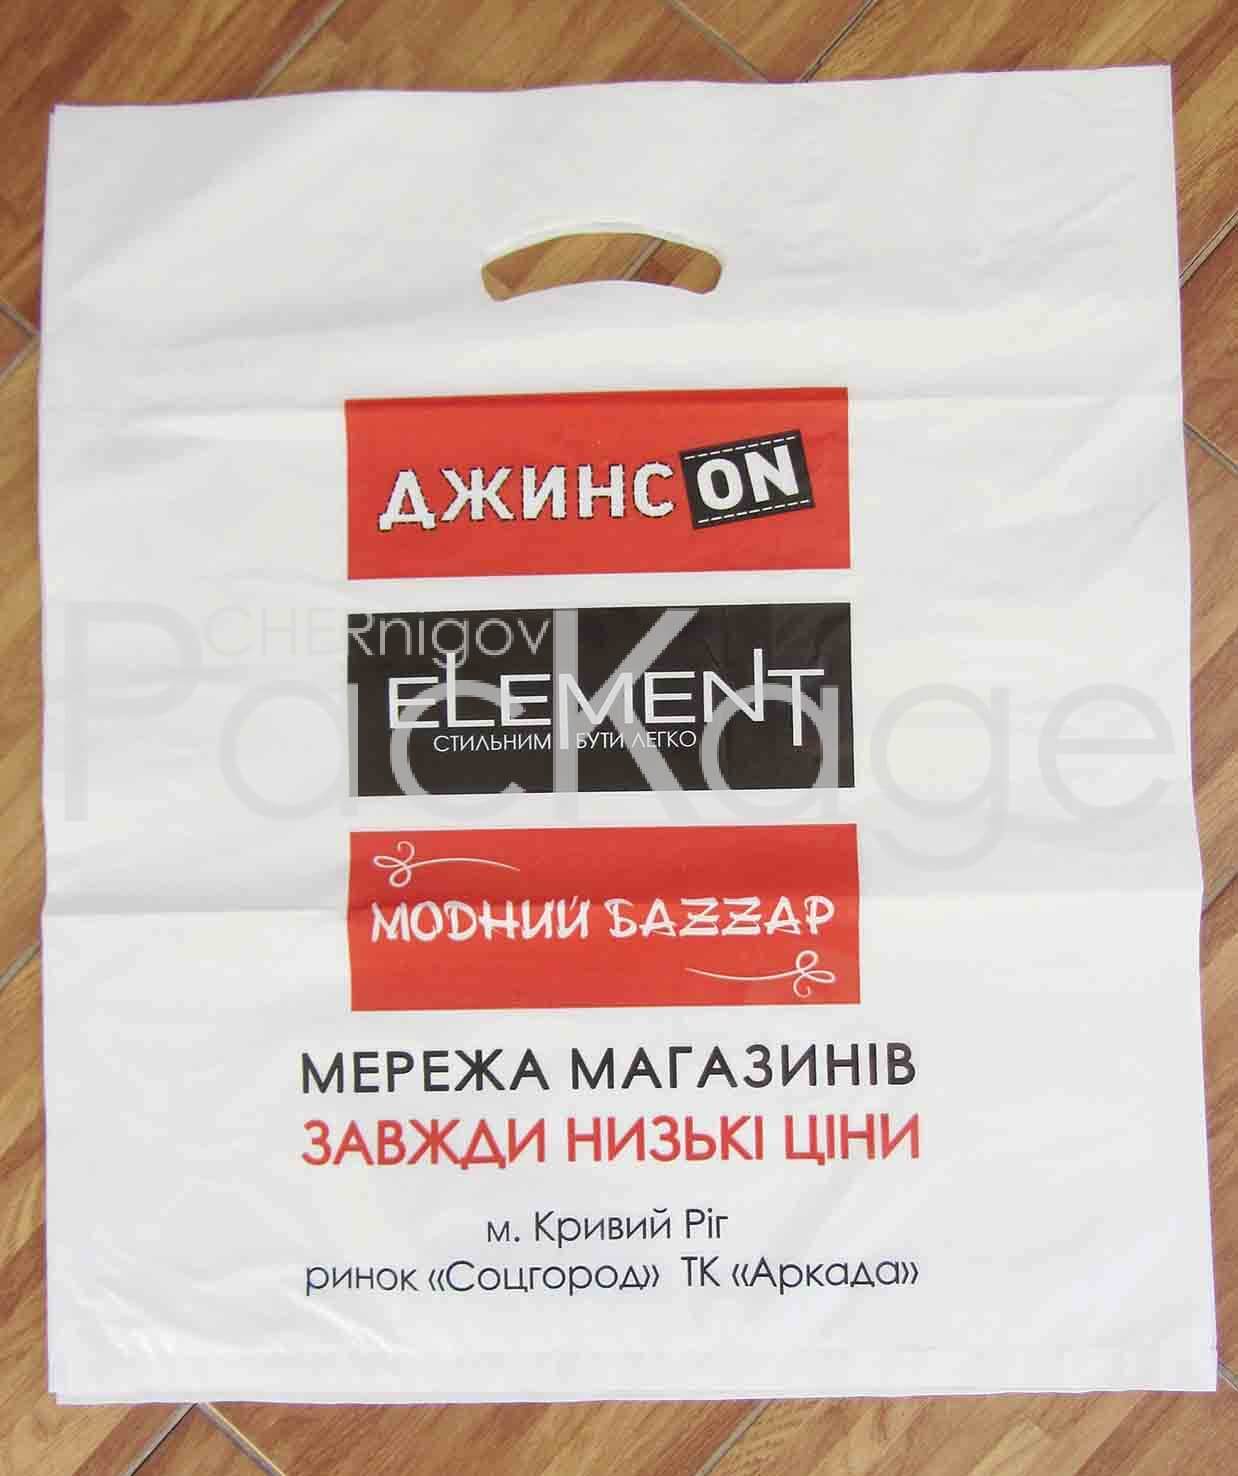 Как хранить целлофановые пакеты Chernigov Package - Photo IMG_6357